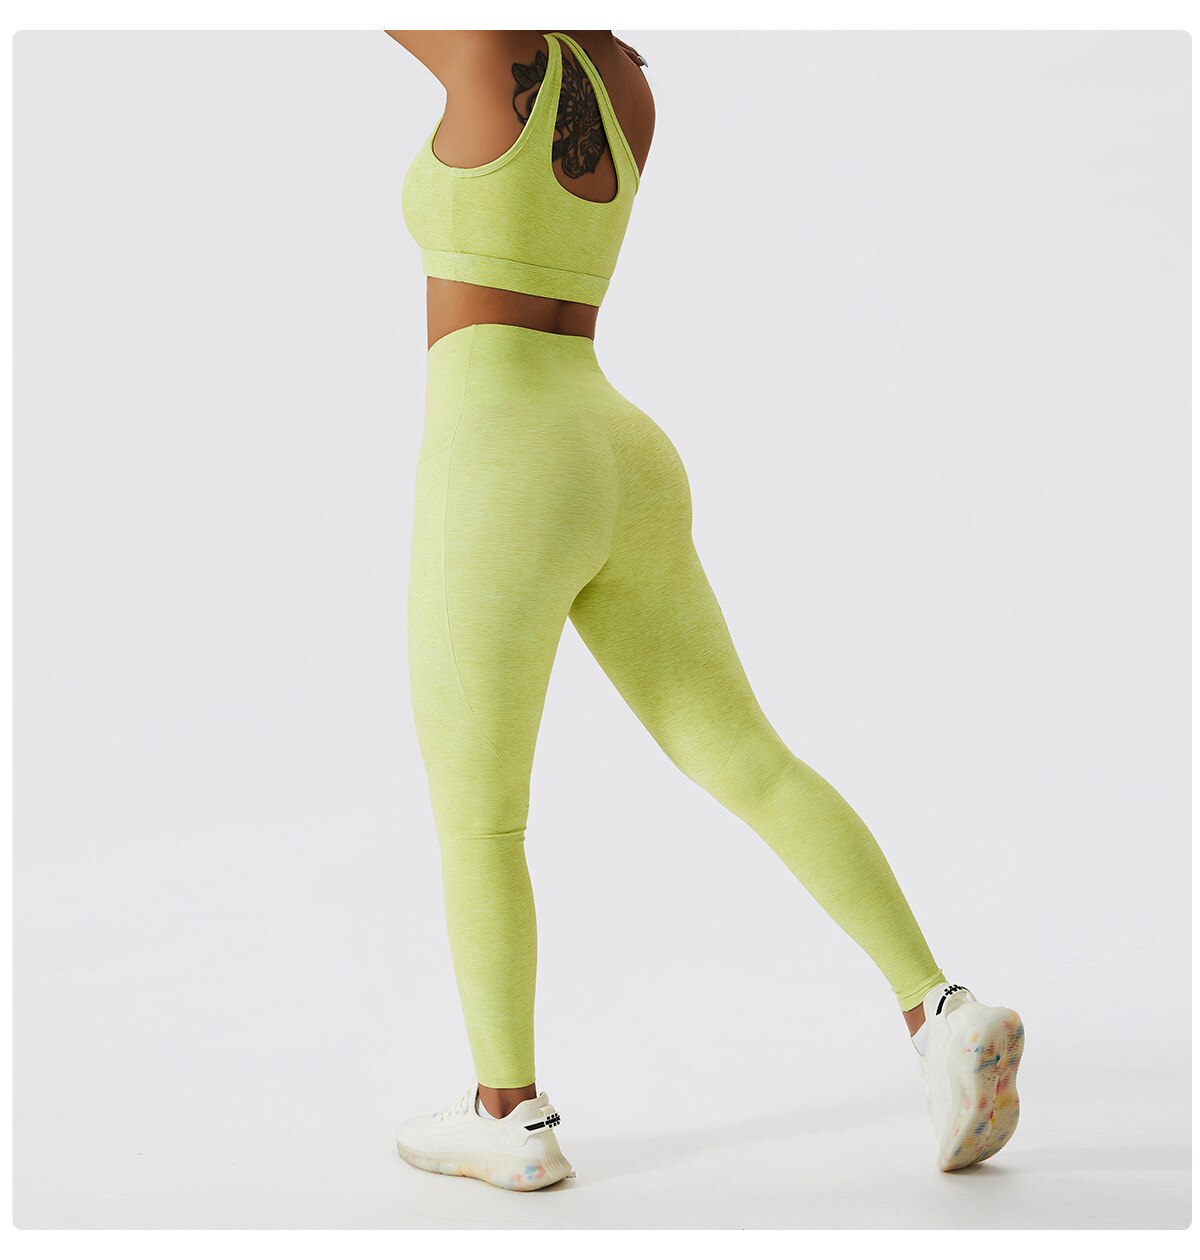 2-Piece-Yoga-Clothes-Women-s-Tracksuit-Athletic-Wear-Pilates-Fitness-Suit-Gym-Workout-Push-Up-3